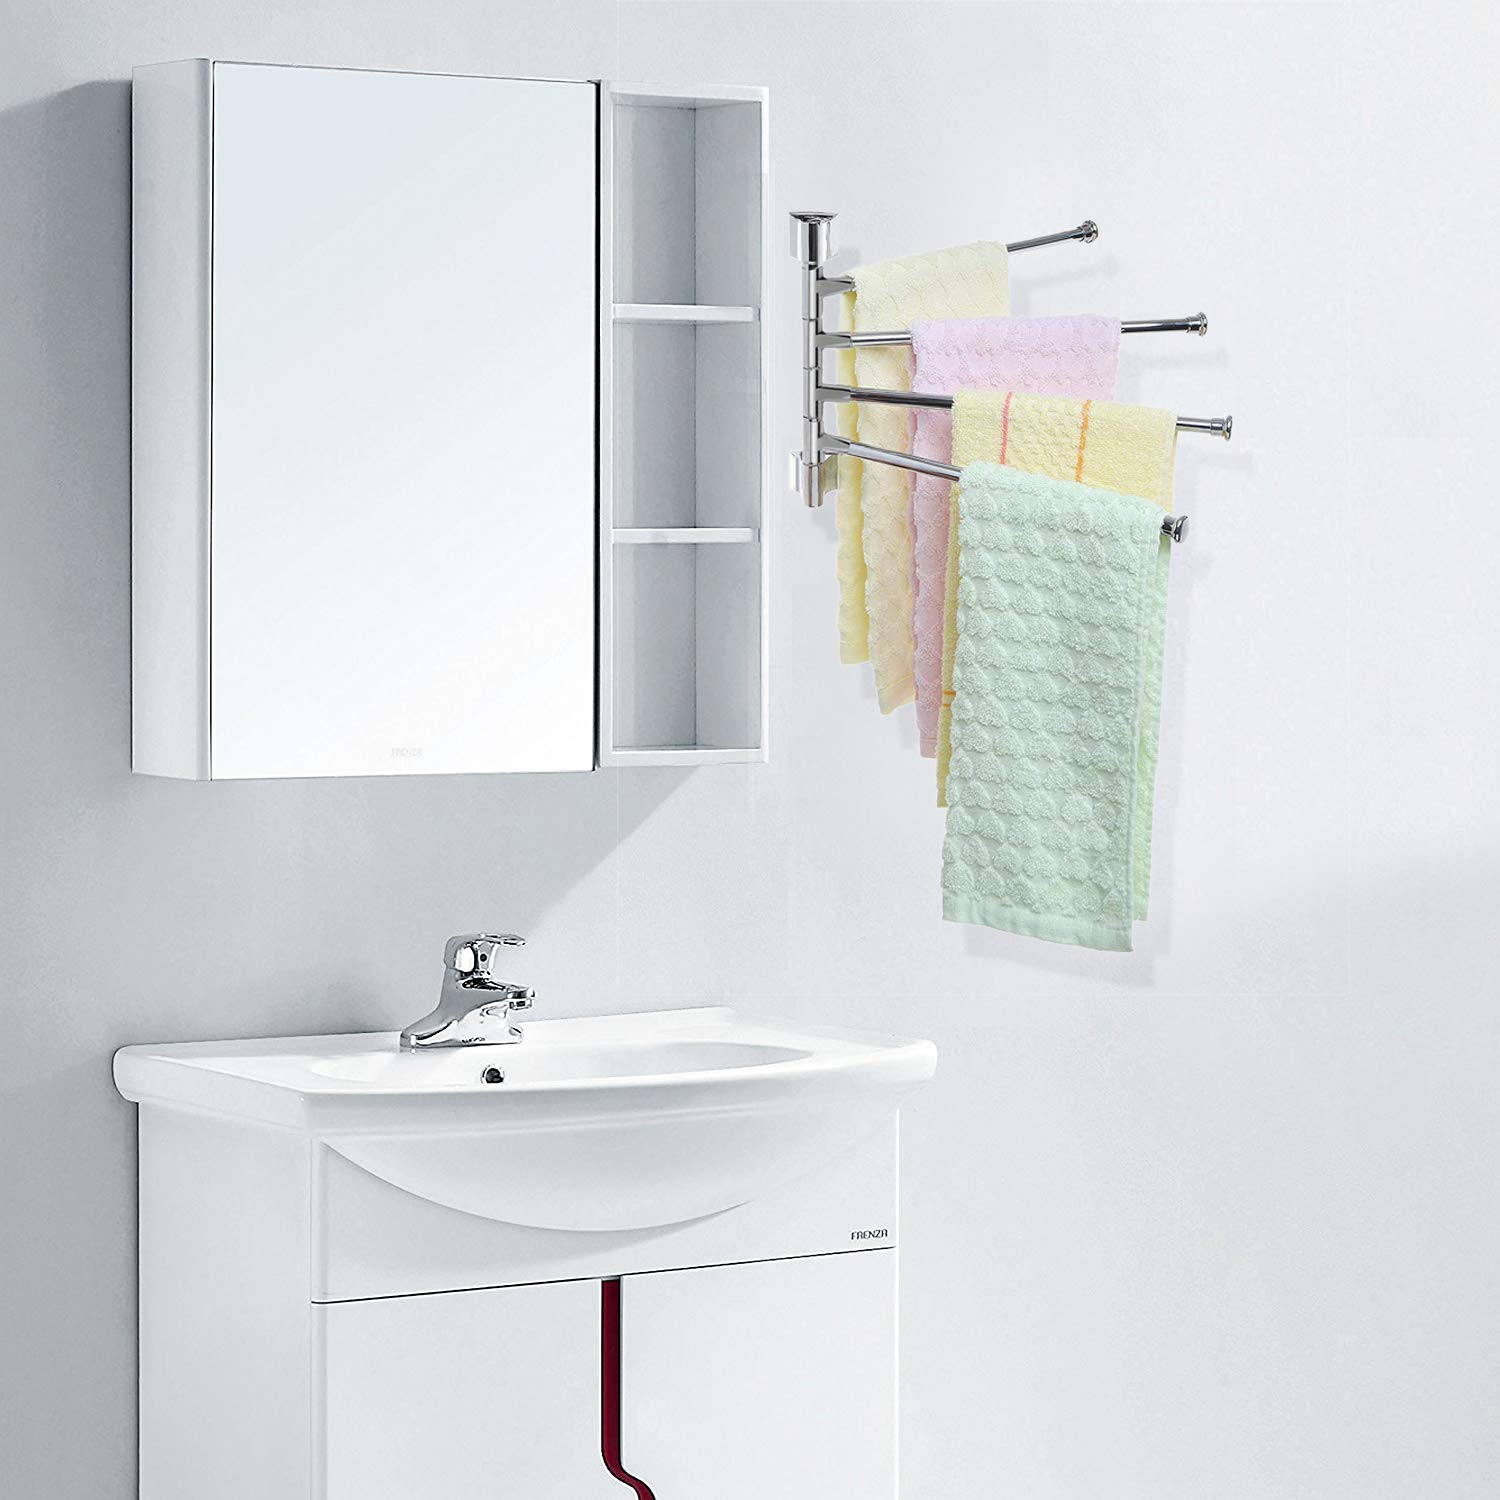 Plantex Stainless Steel 4-Arm Bathroom Swing Hanger Towel Rack / Holder for Bathroom / Towel Stand / Bathroom Accessories